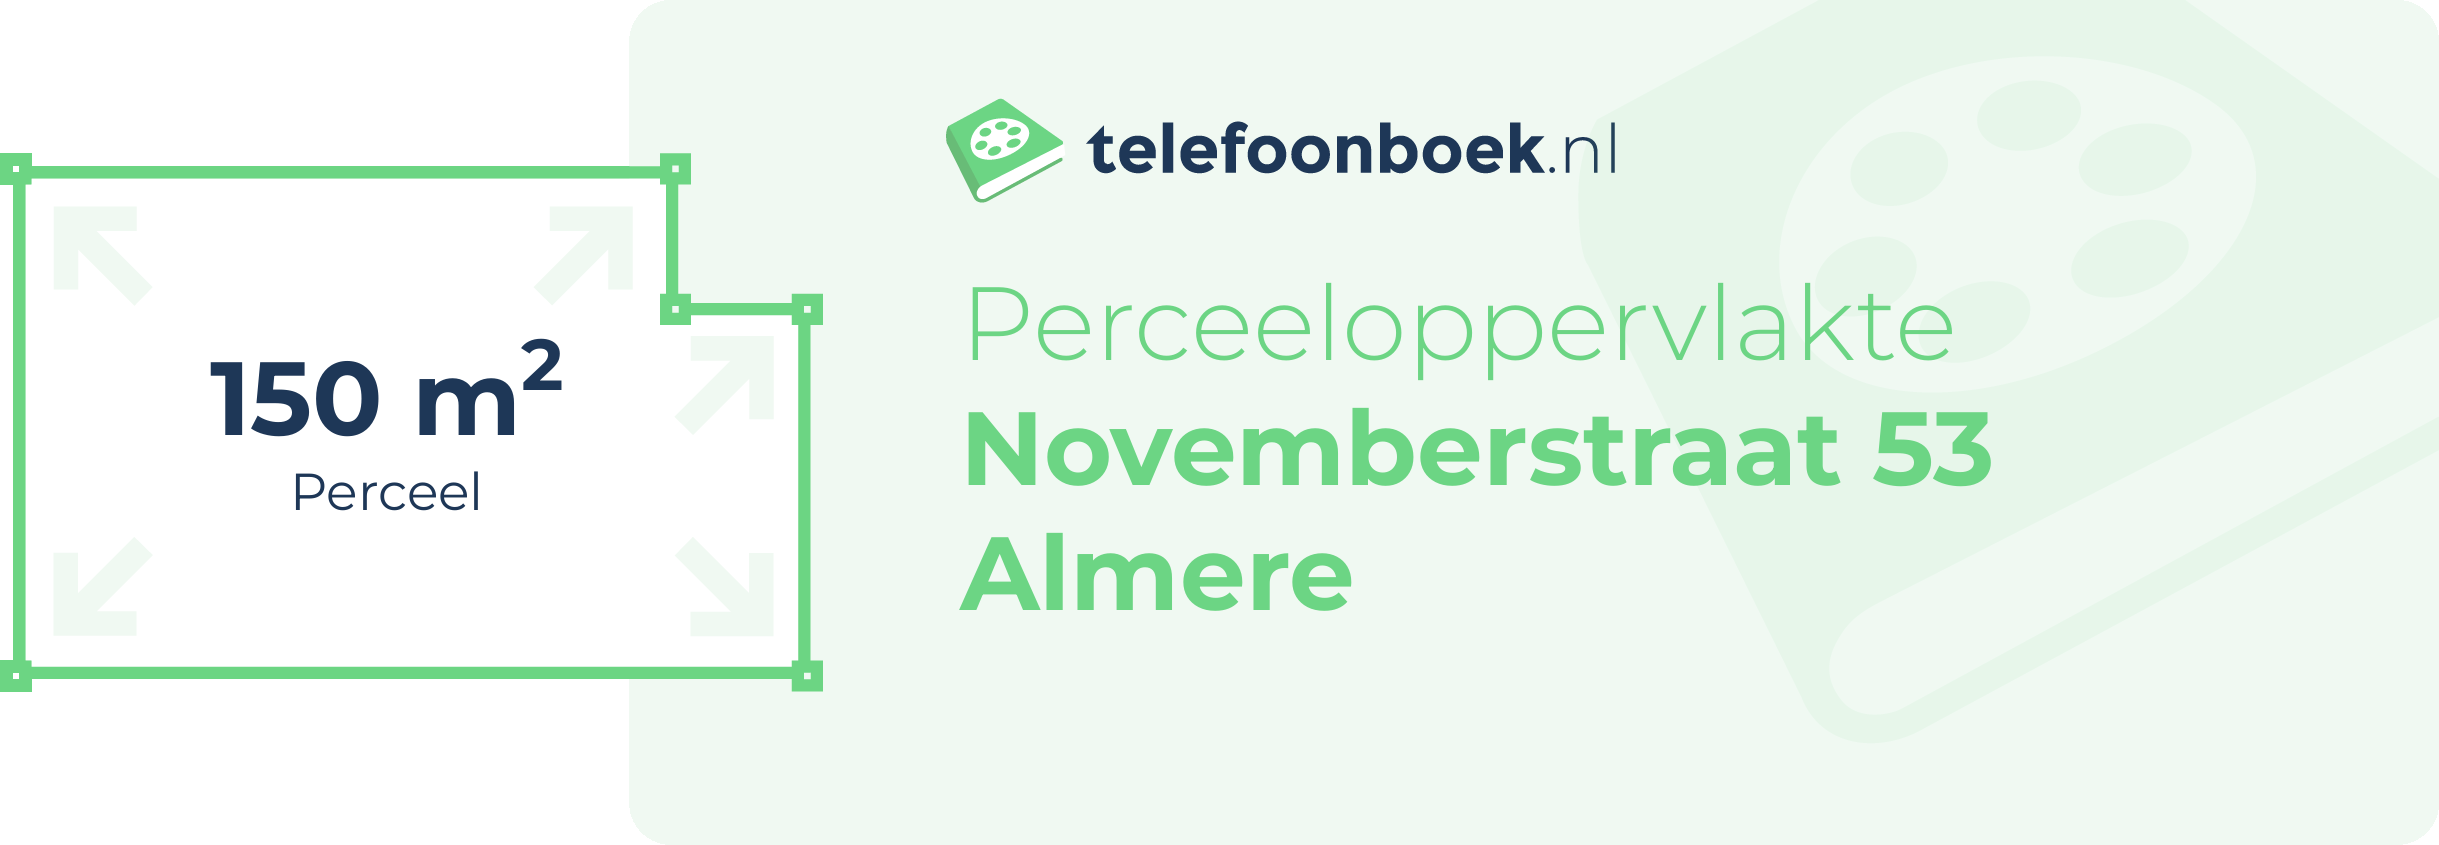 Perceeloppervlakte Novemberstraat 53 Almere